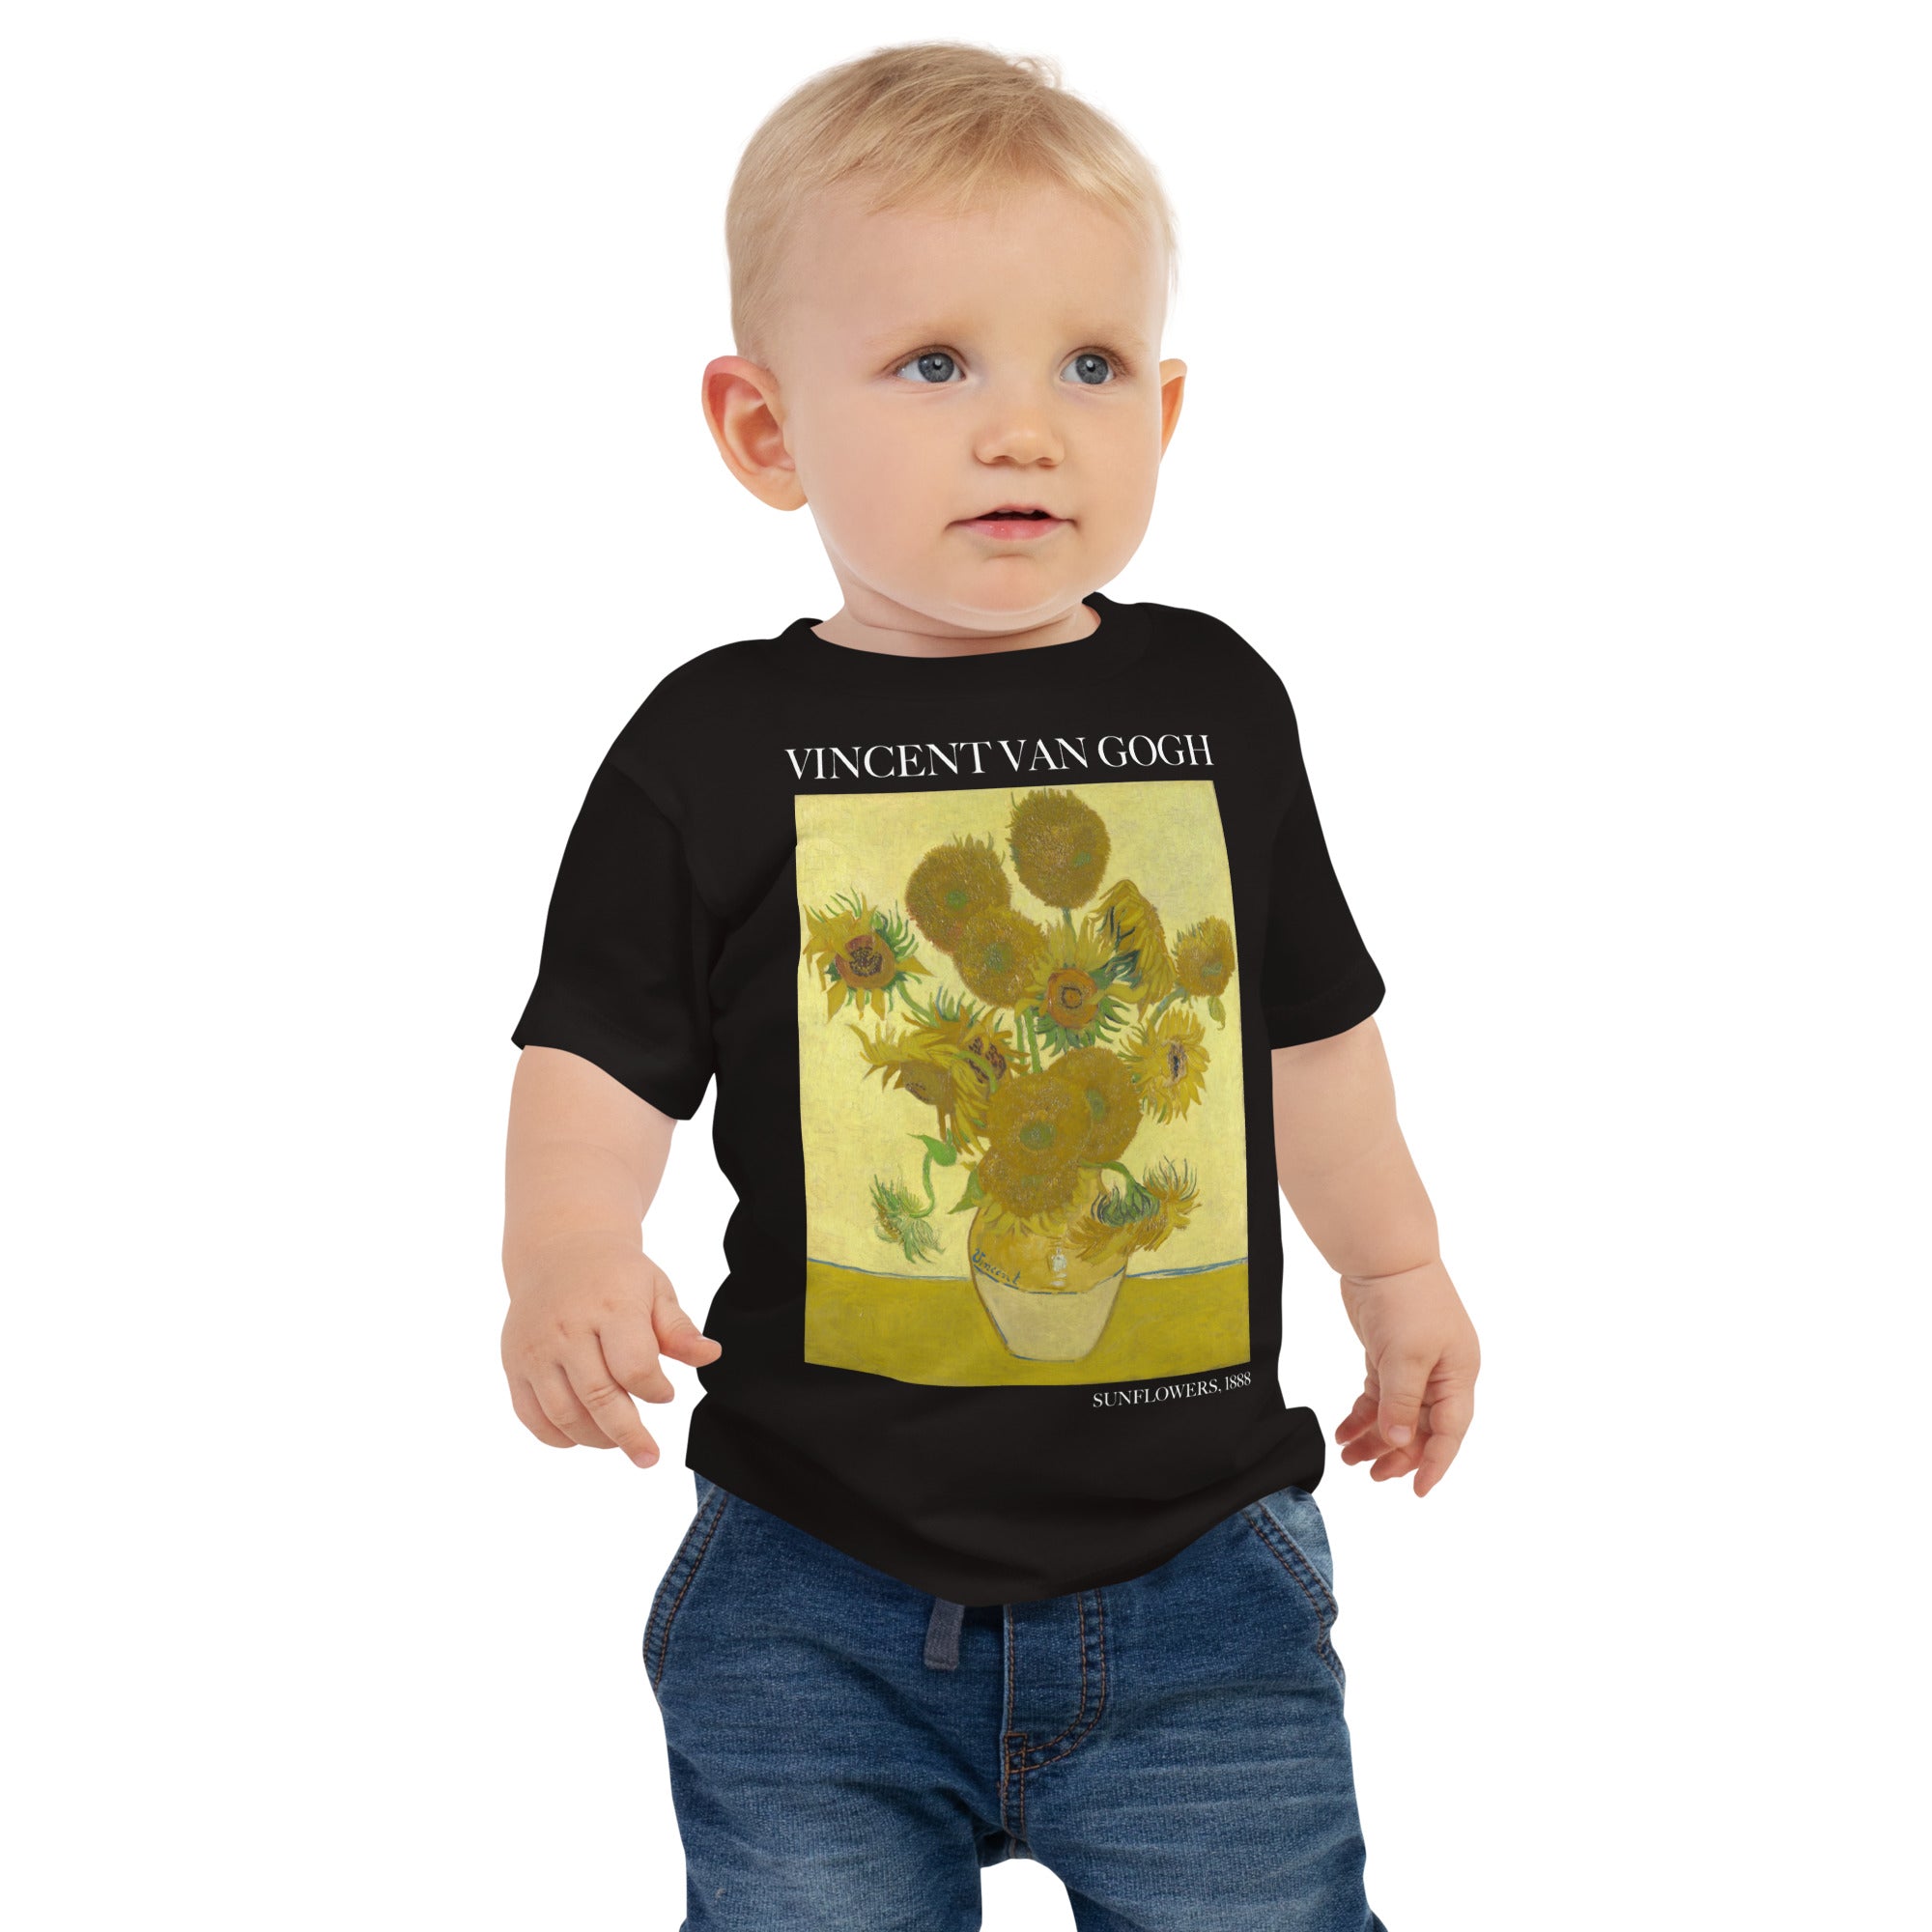 Vincent van Gogh 'Sunflowers' Famous Painting Baby Staple T-Shirt | Premium Baby Art Tee